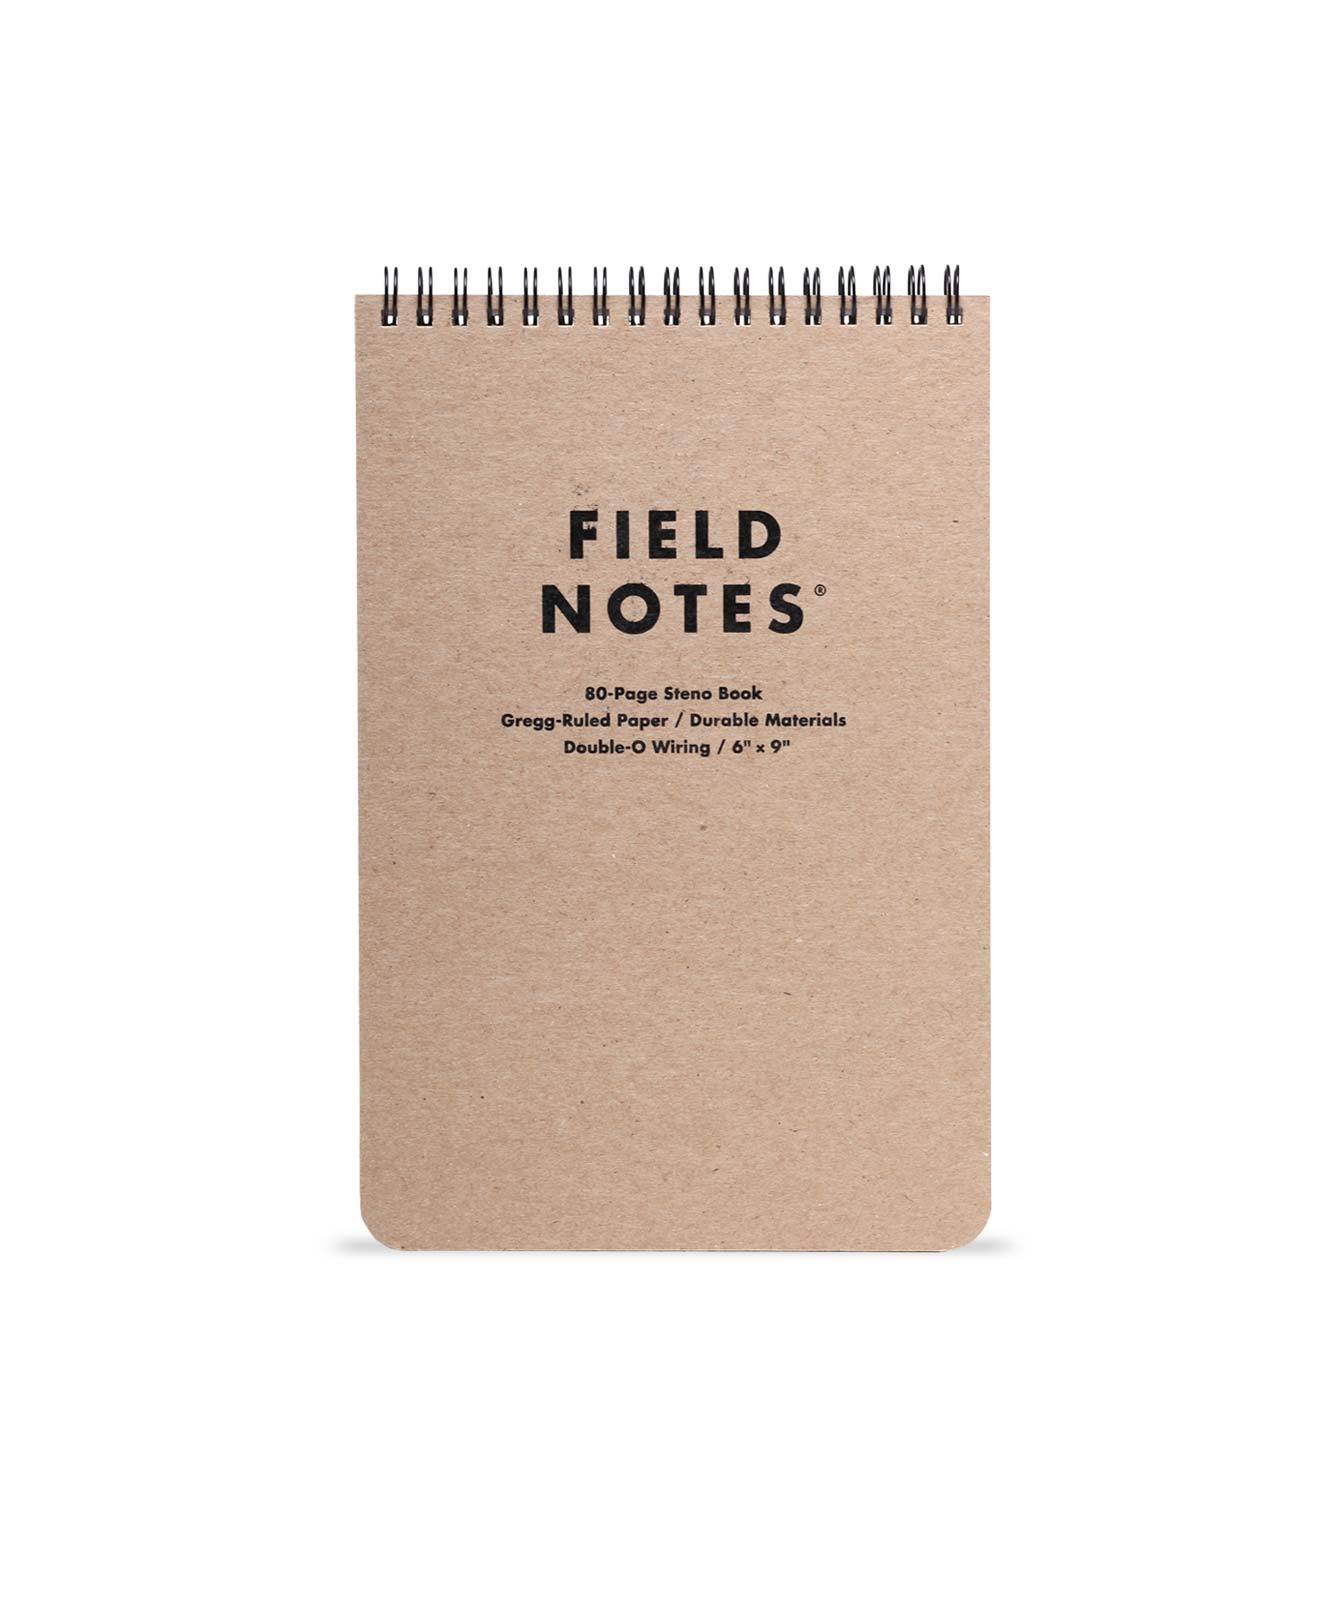 Field Notes: The Steno